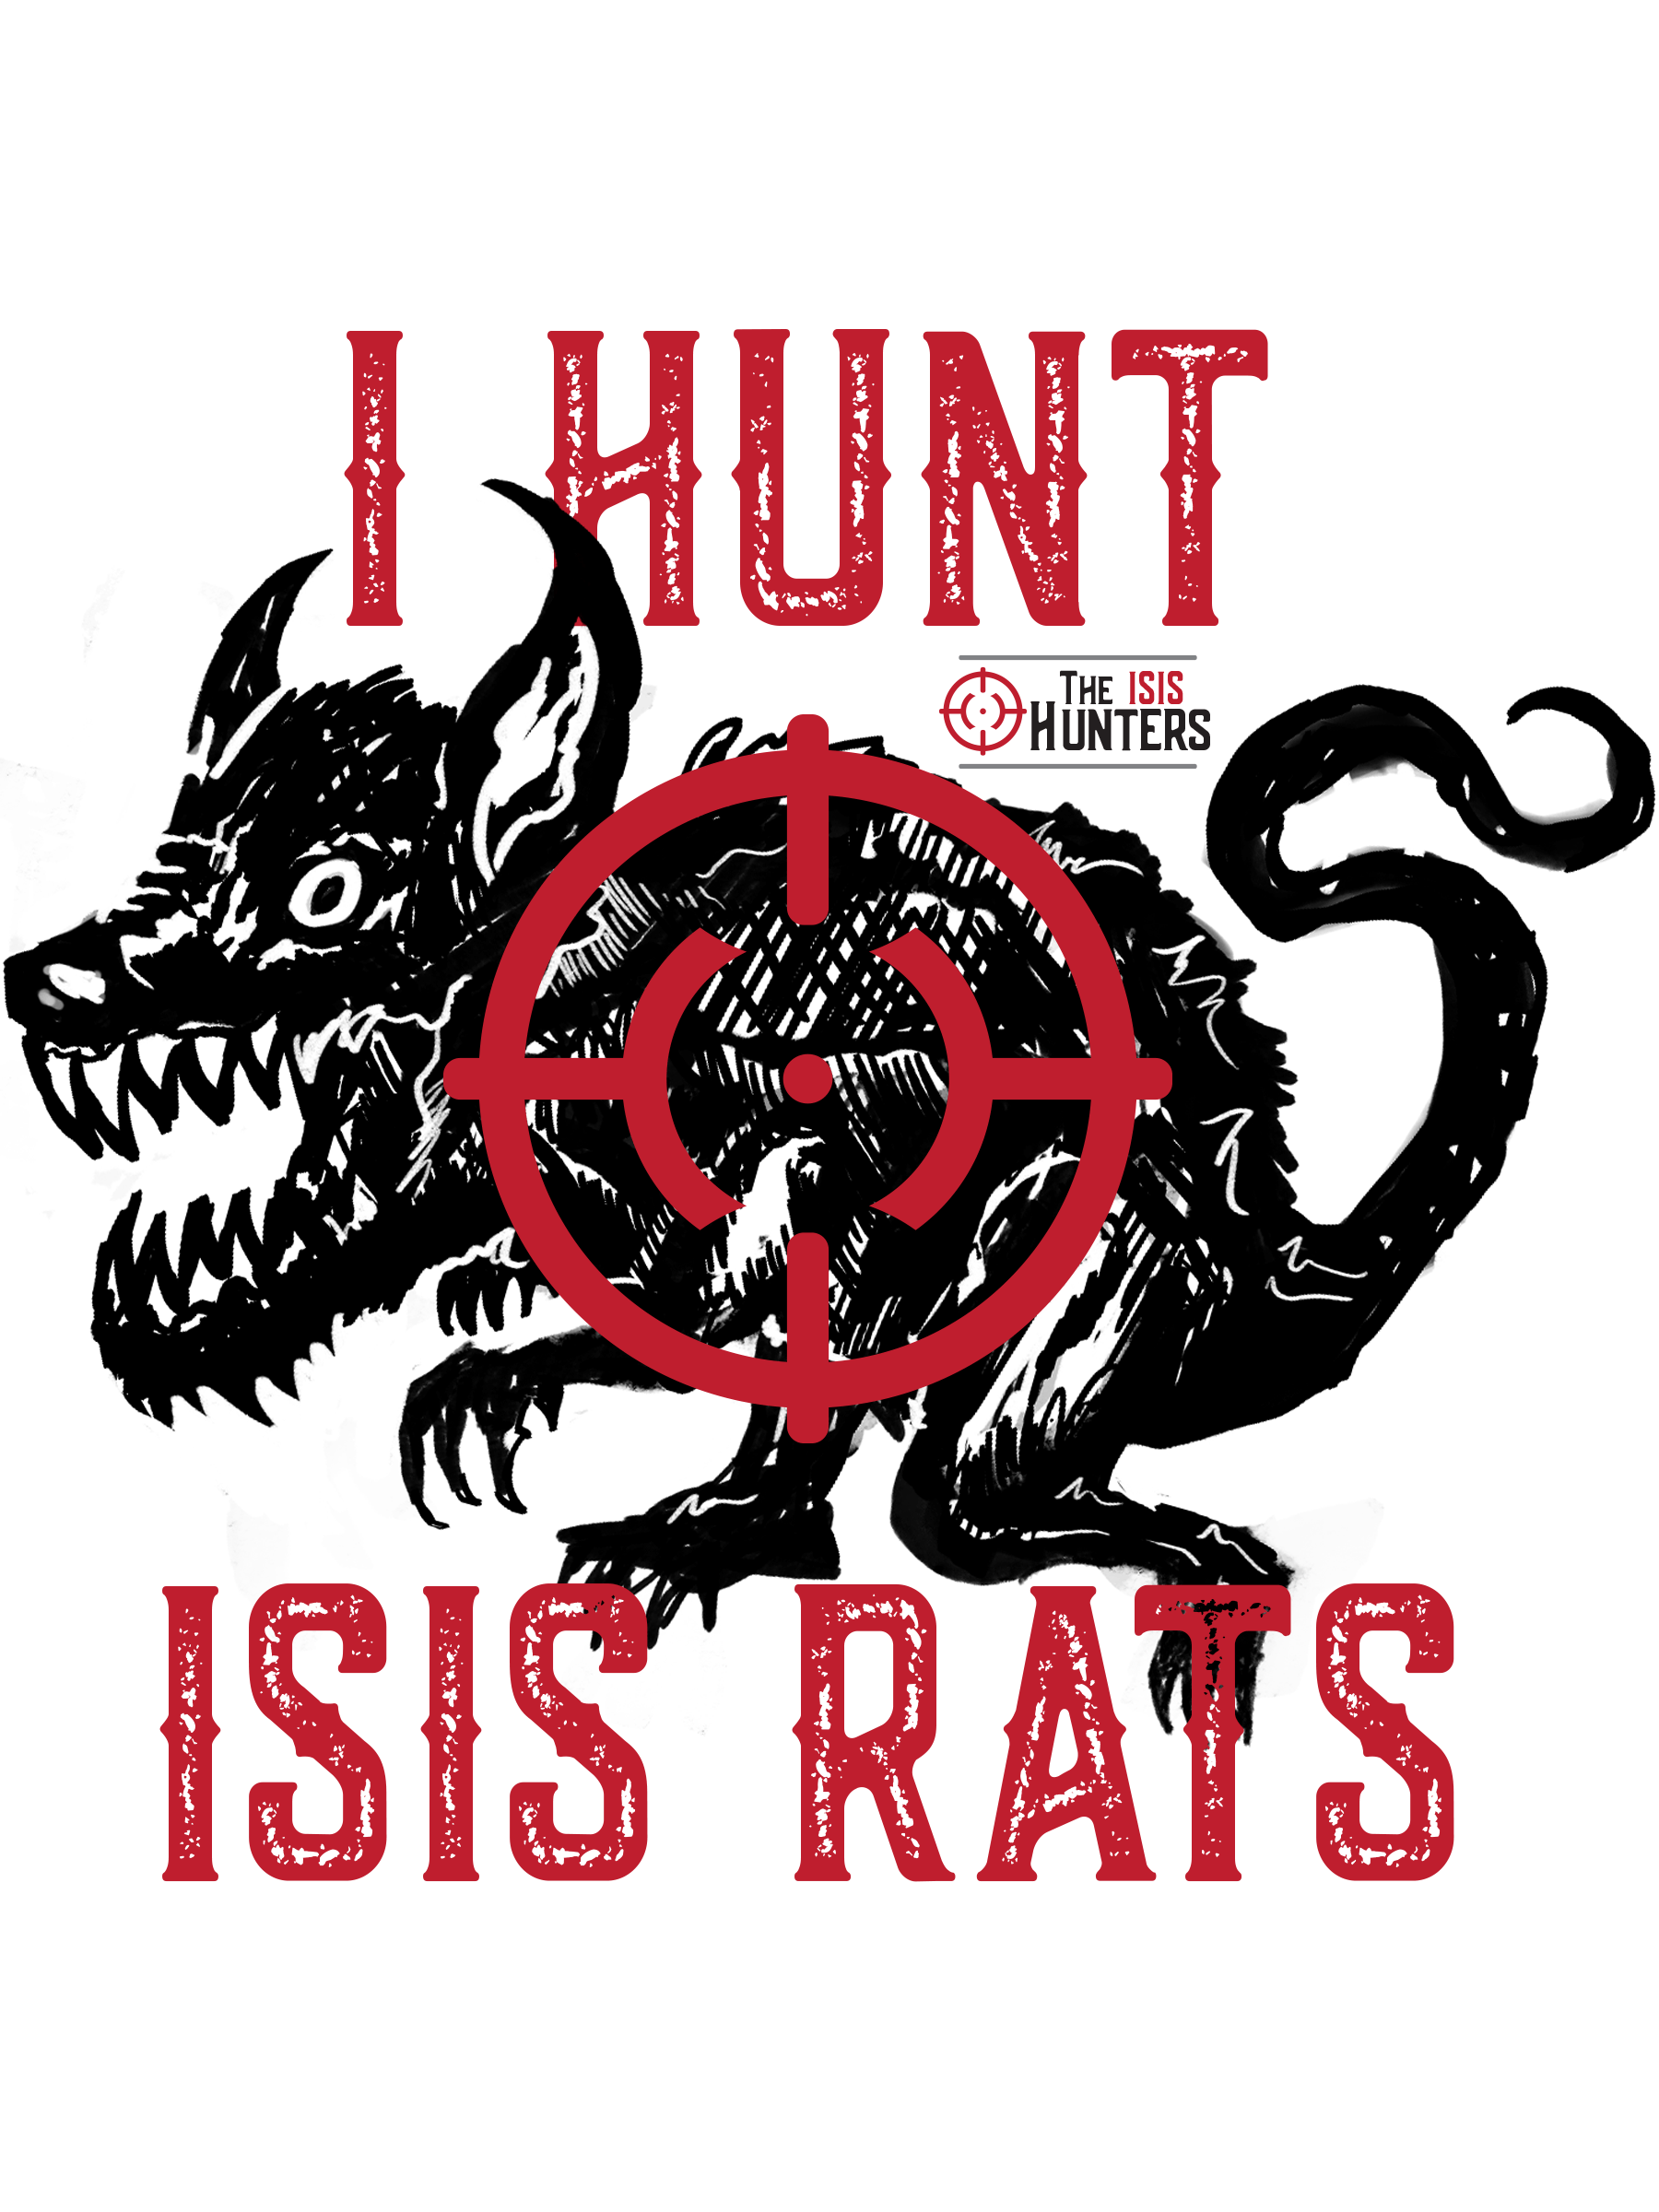 Isis Logo - I Hunt ISIS Rats | Gear Assist